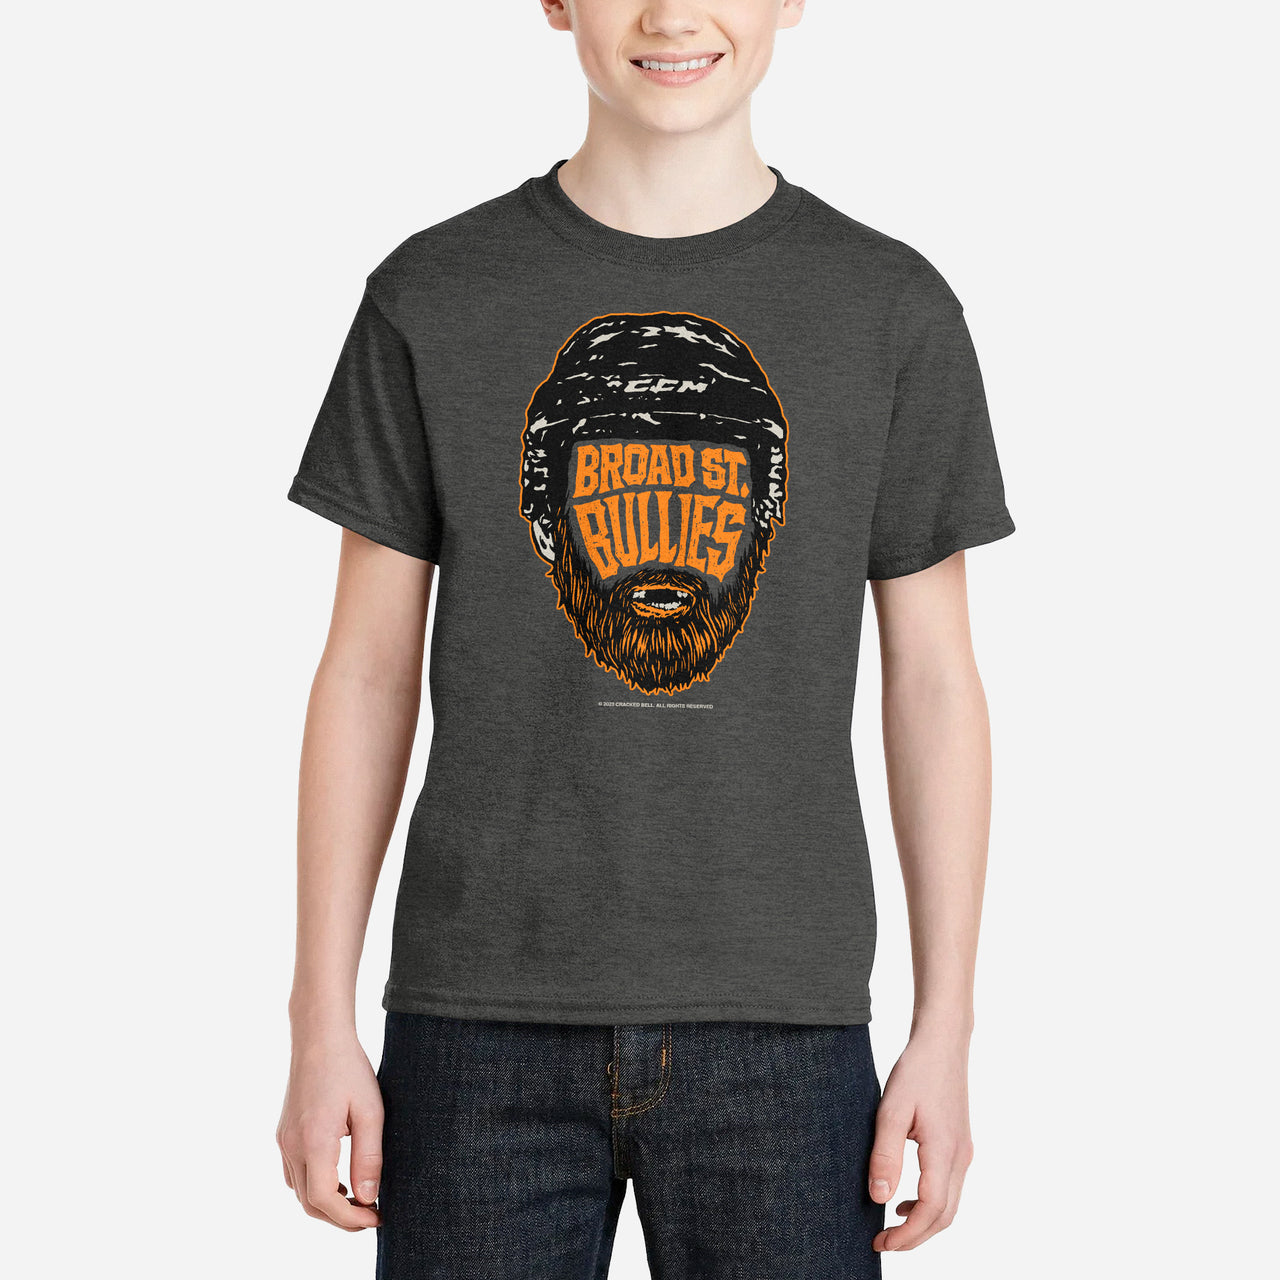 "Bullies" Youth Shirt